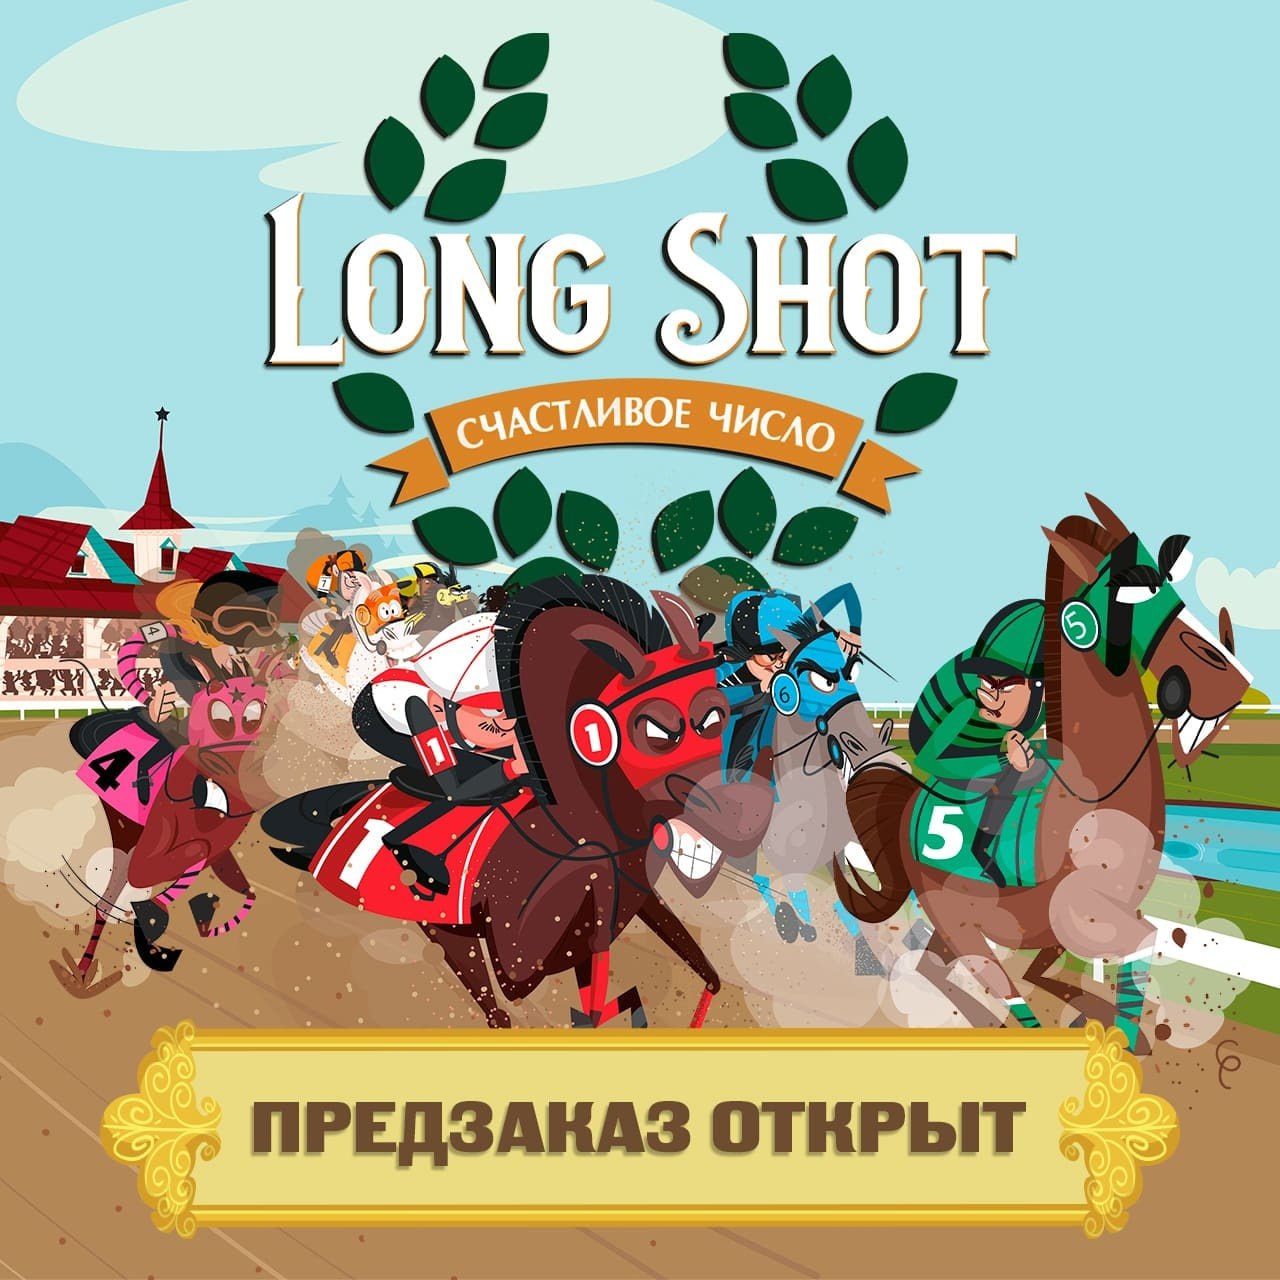 Long shot: The Dice game - начало кампании!